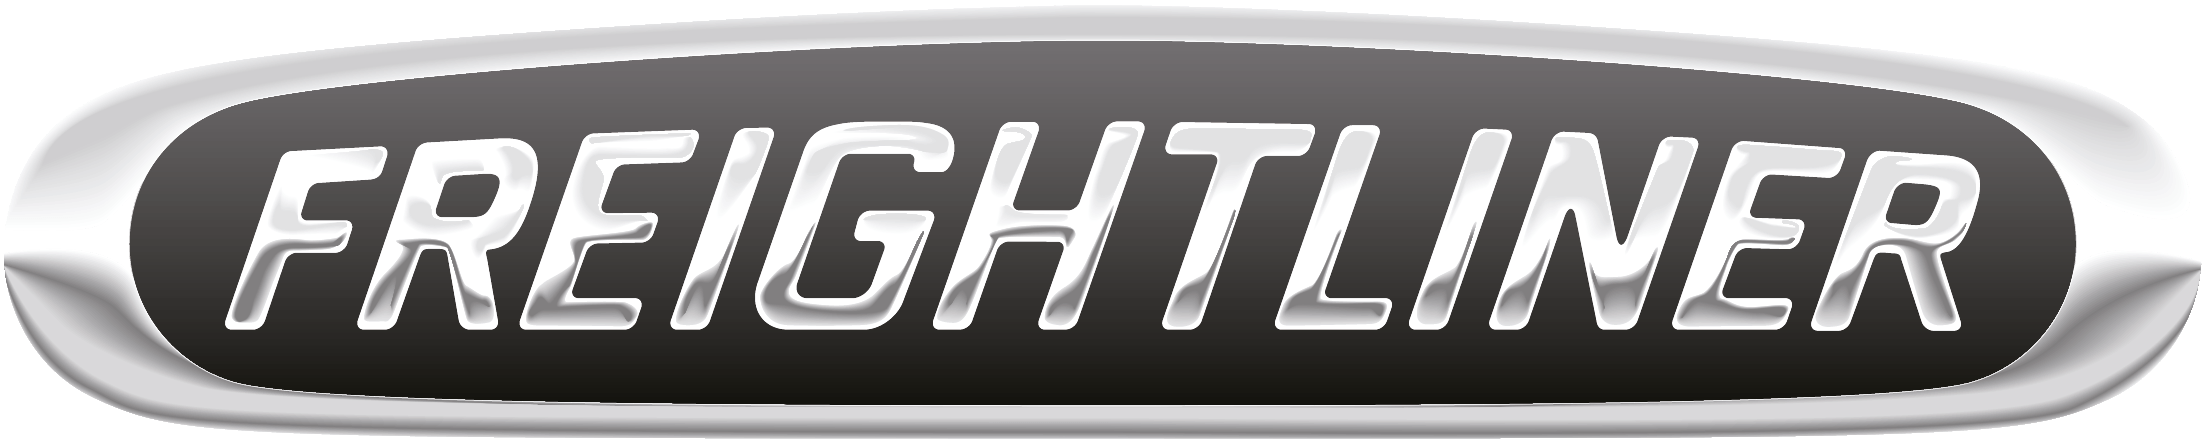 Freightliner Trucks Logo png